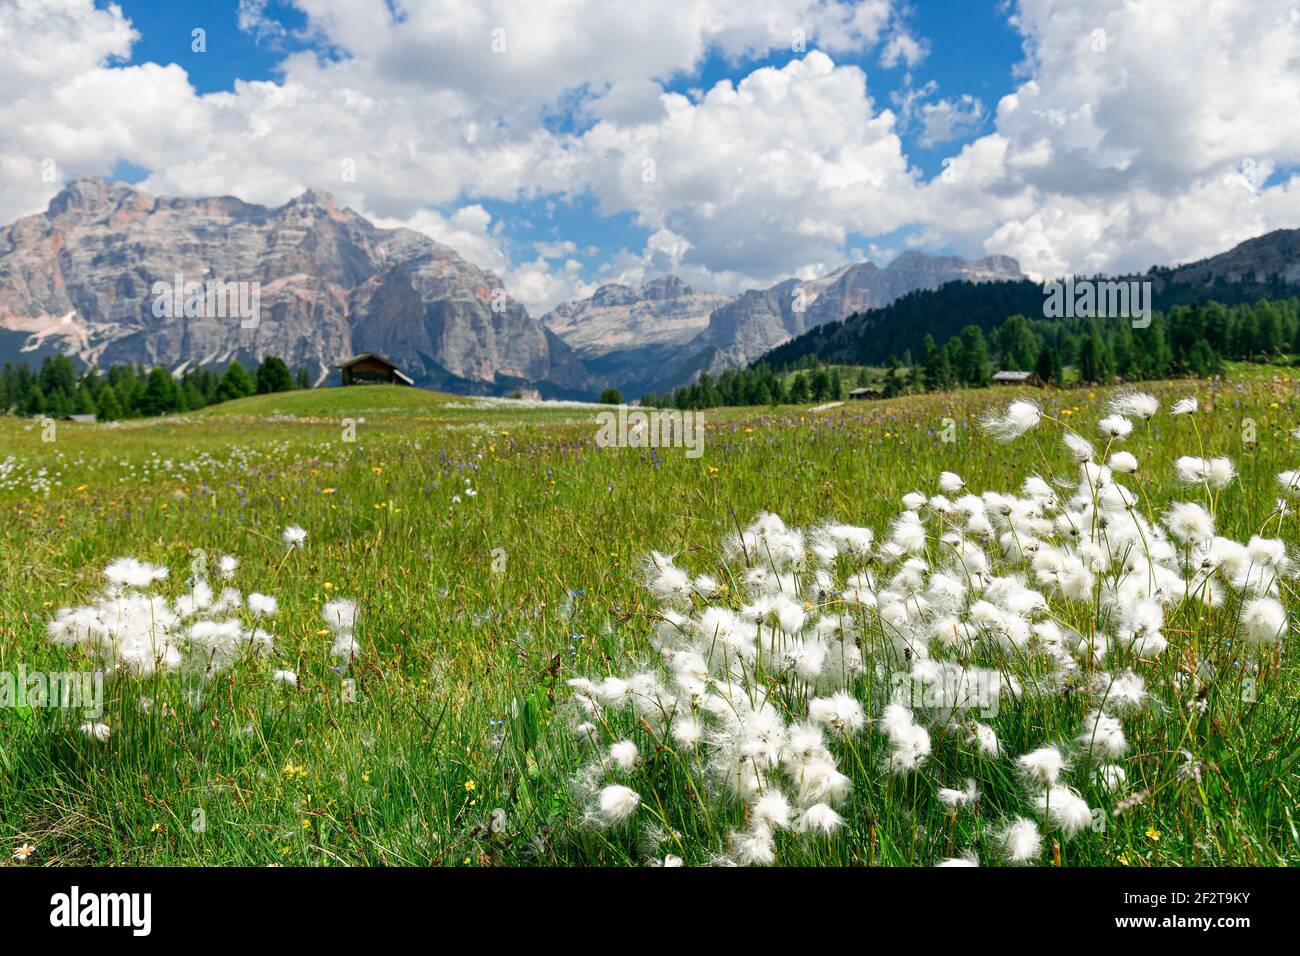 Wild cotton flowers (cotton grass) in alpine meadows. Italian Alps, Alto Adige. Stock Photo